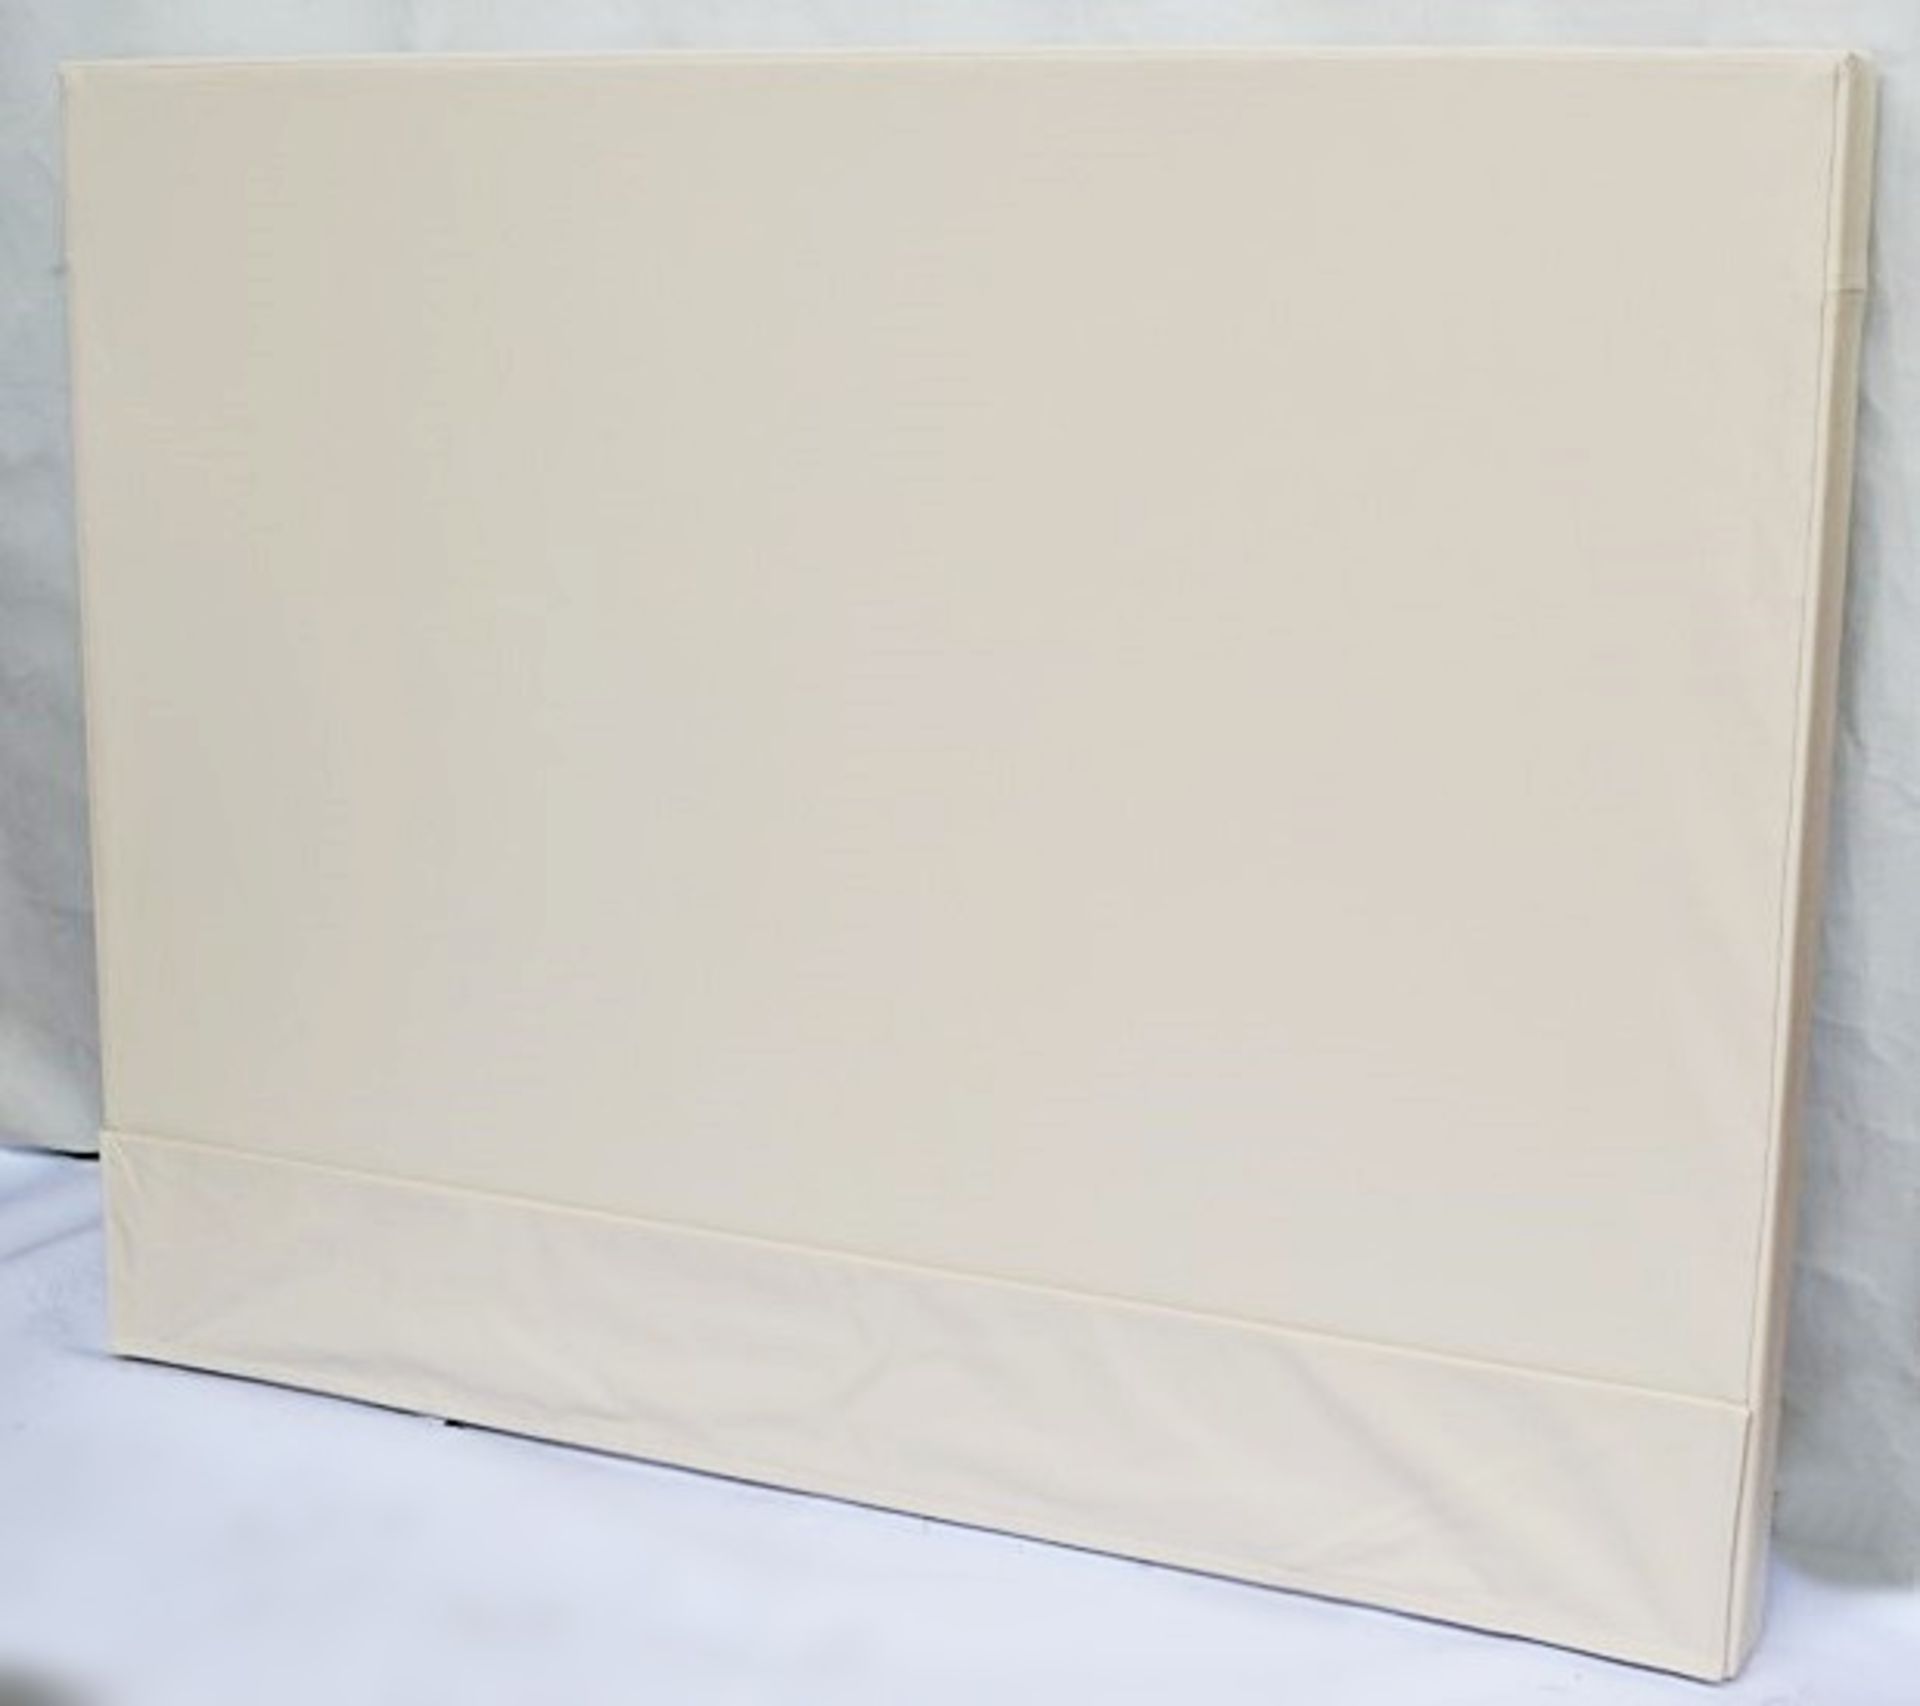 1 x VISPRING "Ceto" Cream Faux Leather Headboard - Dimensions: W182 x  x H140 x D12cm - Ref: 5014501 - Image 2 of 4